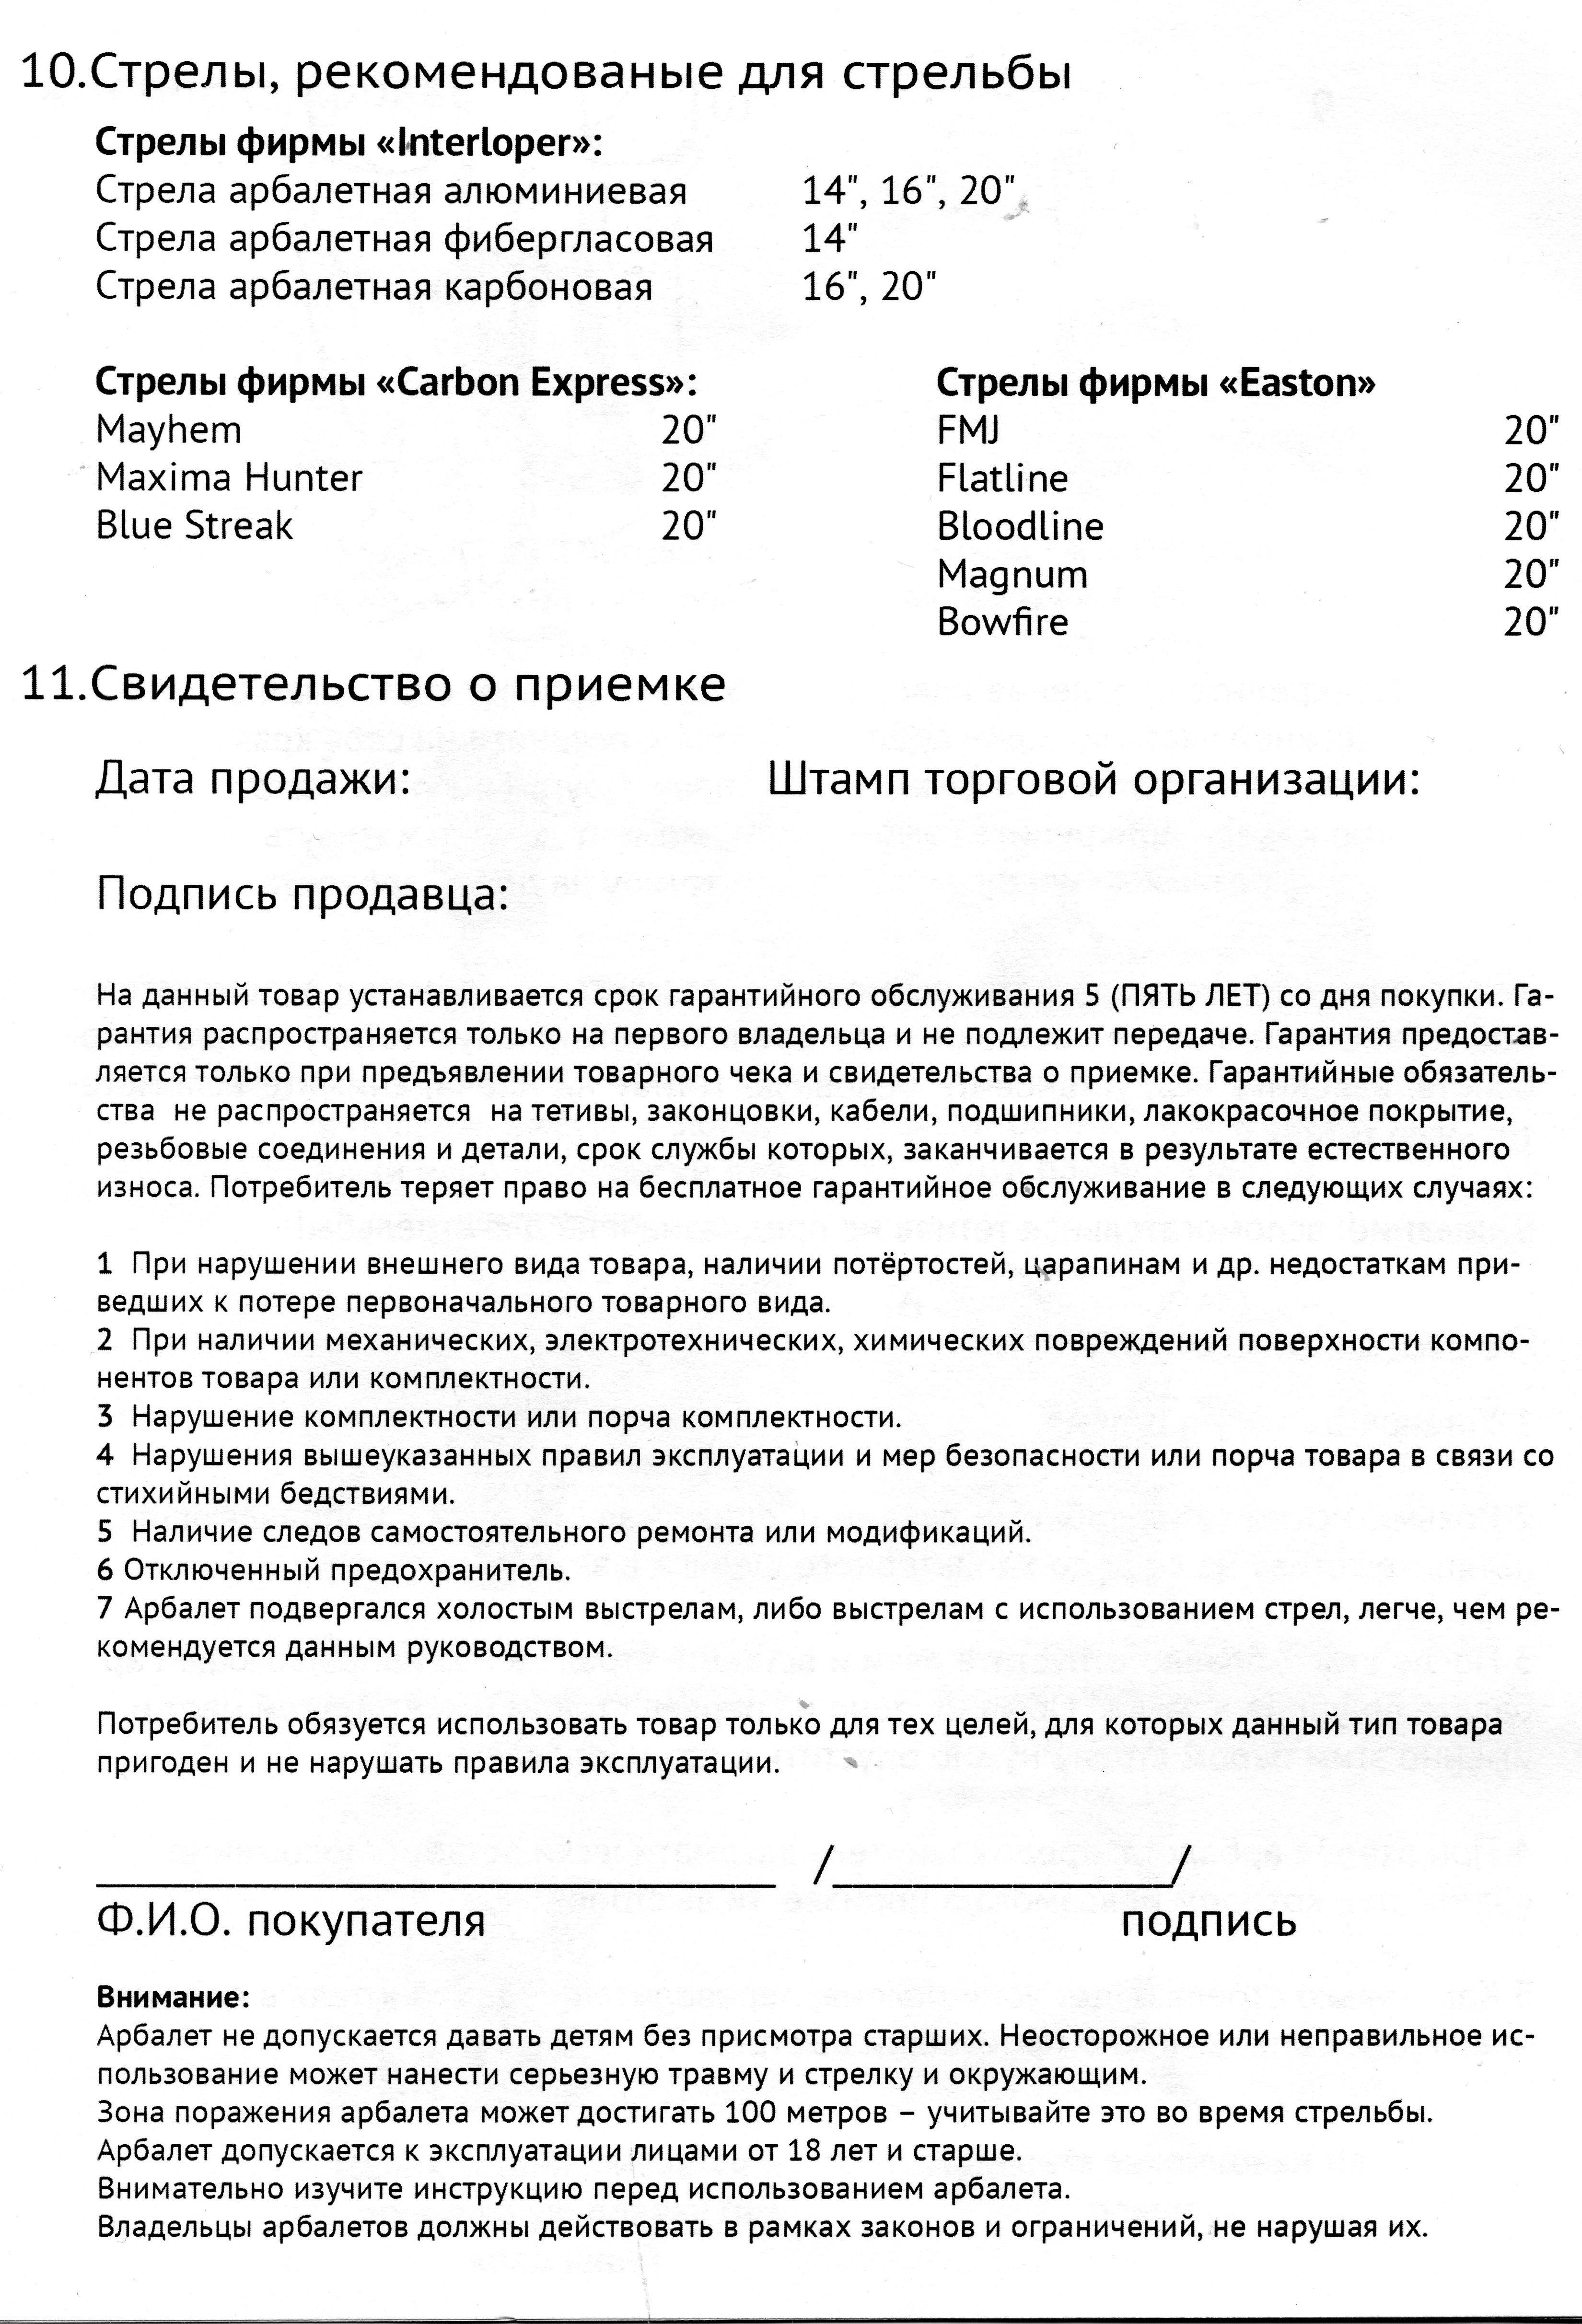 http://www.ayksam.ru/yml/Pasport-6.jpg